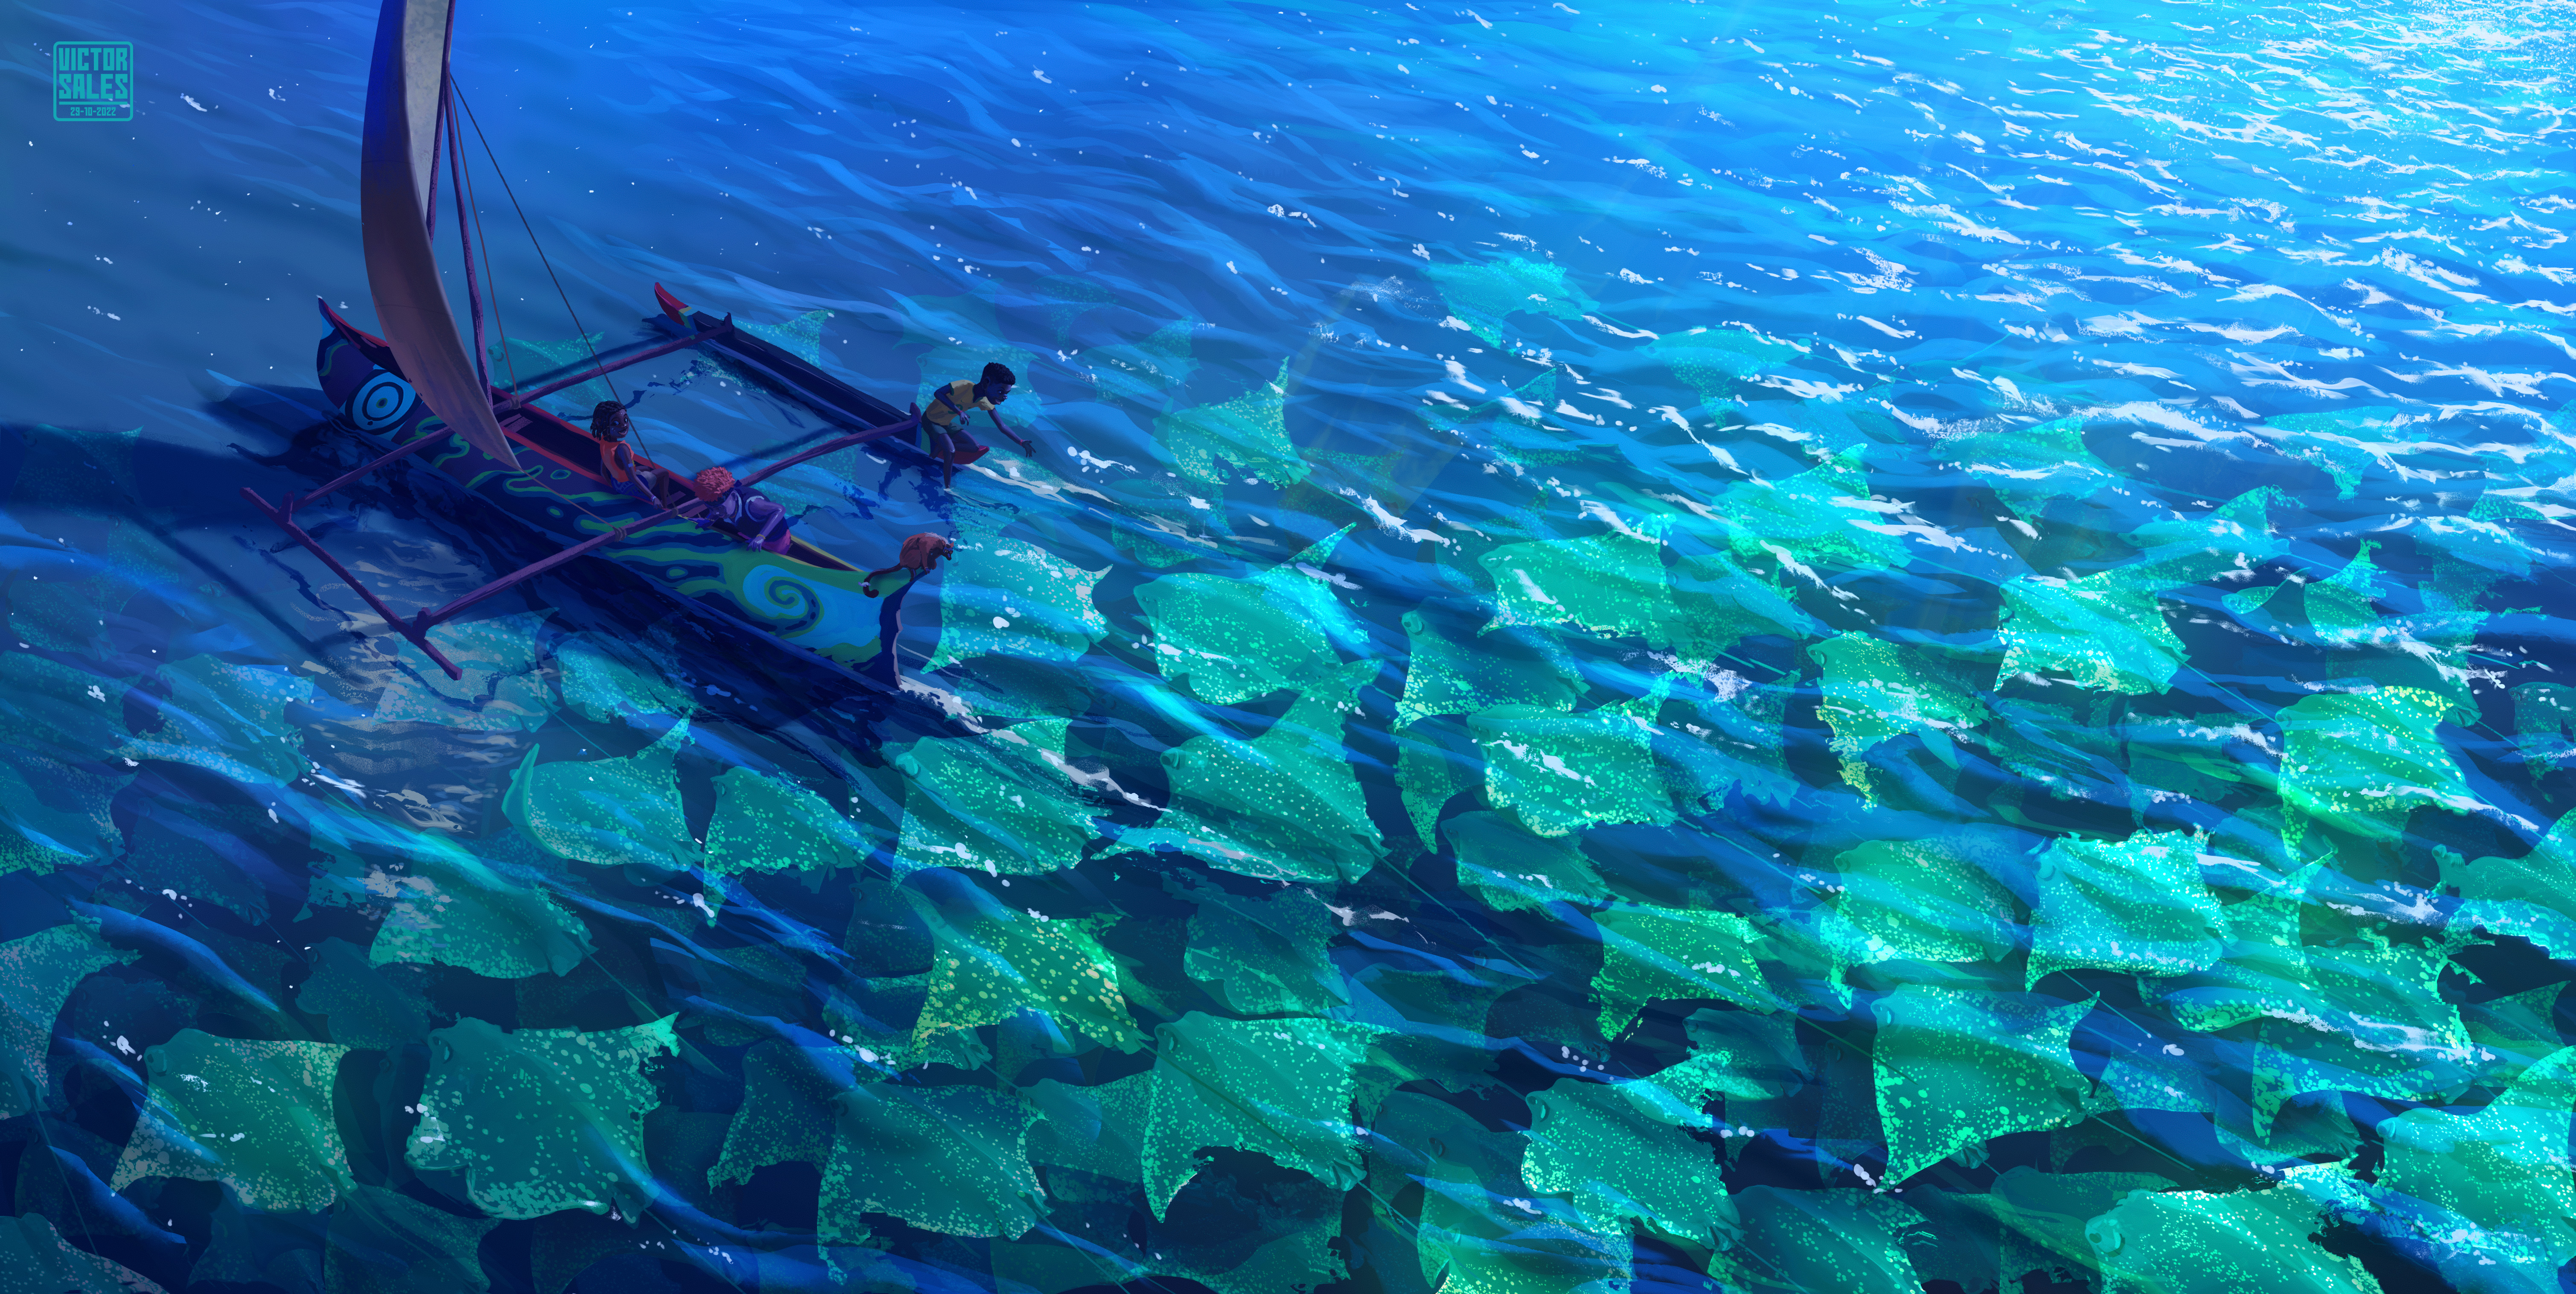 VSales Digital Art Artwork Illustration Landscape Sea Water Boat Manta Rays Animals Nature Sailing S 6038x3032